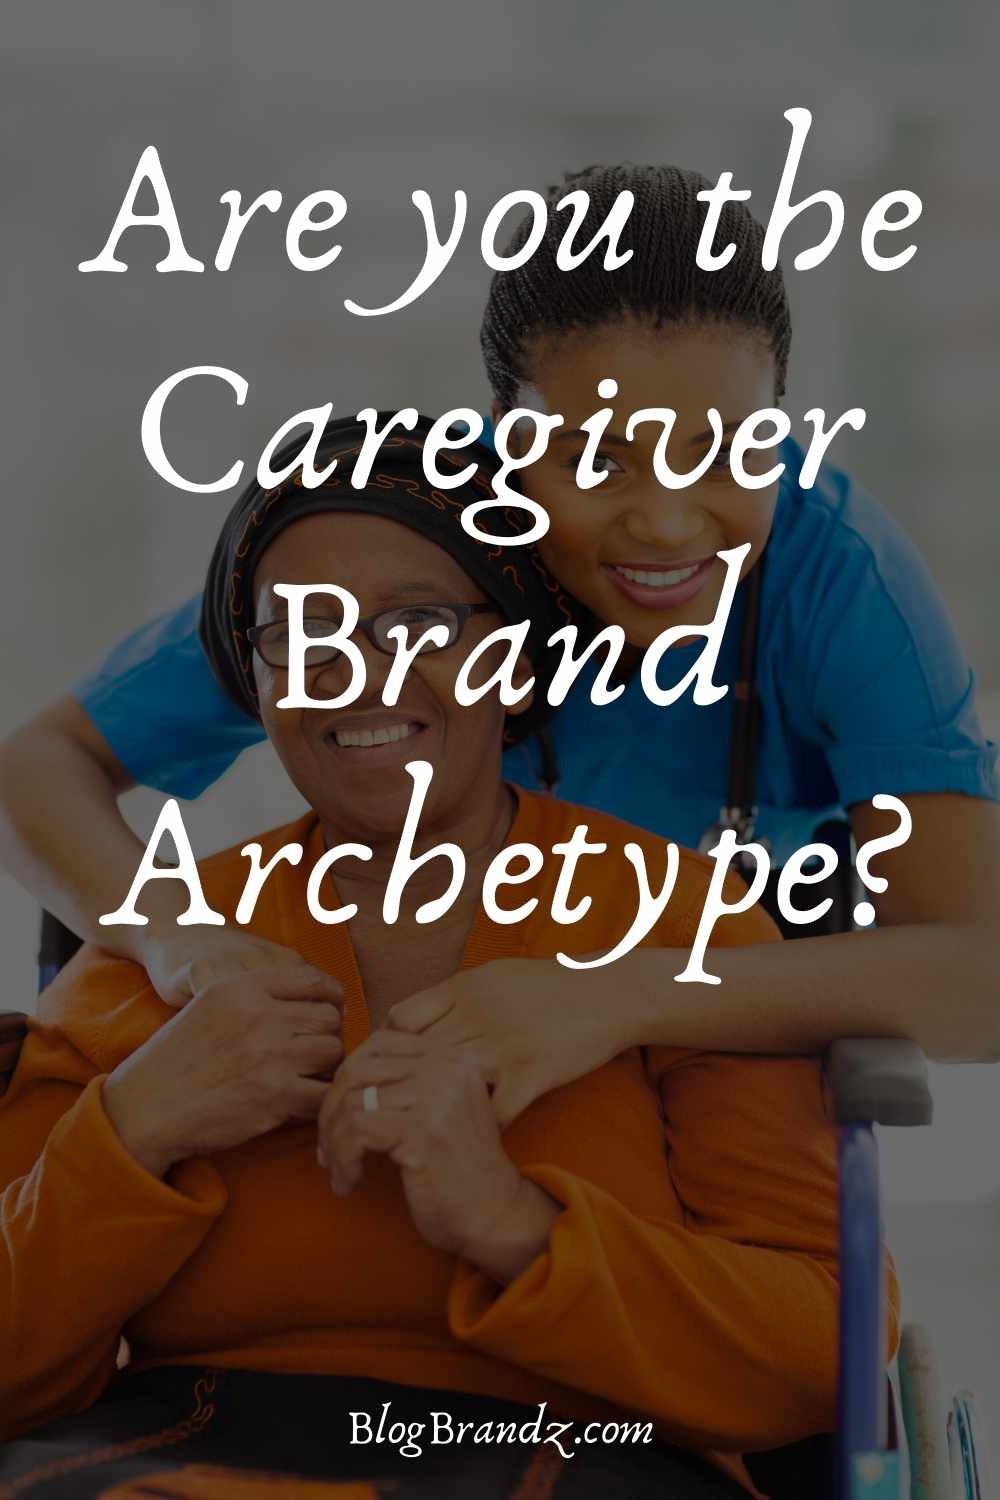 Brand Archetype Caregiver